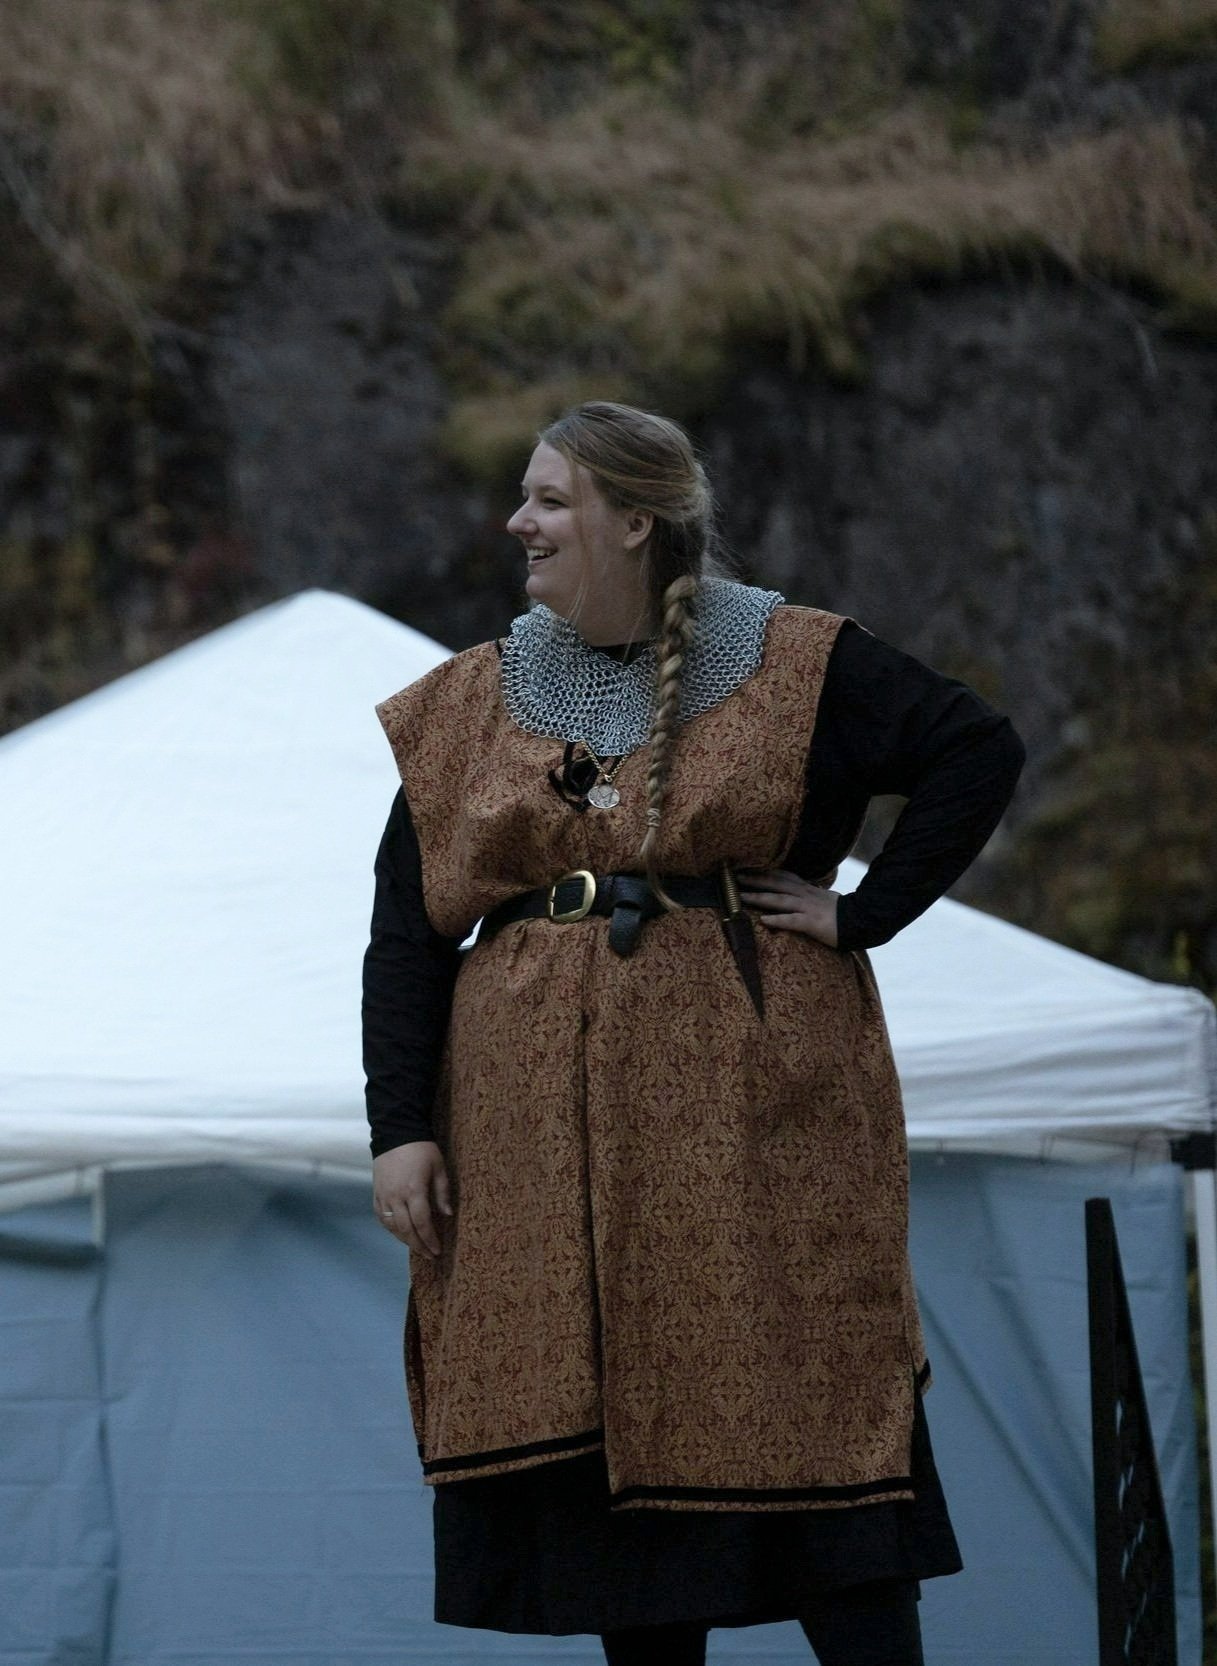 Gracie LeeAnne as Duke of York